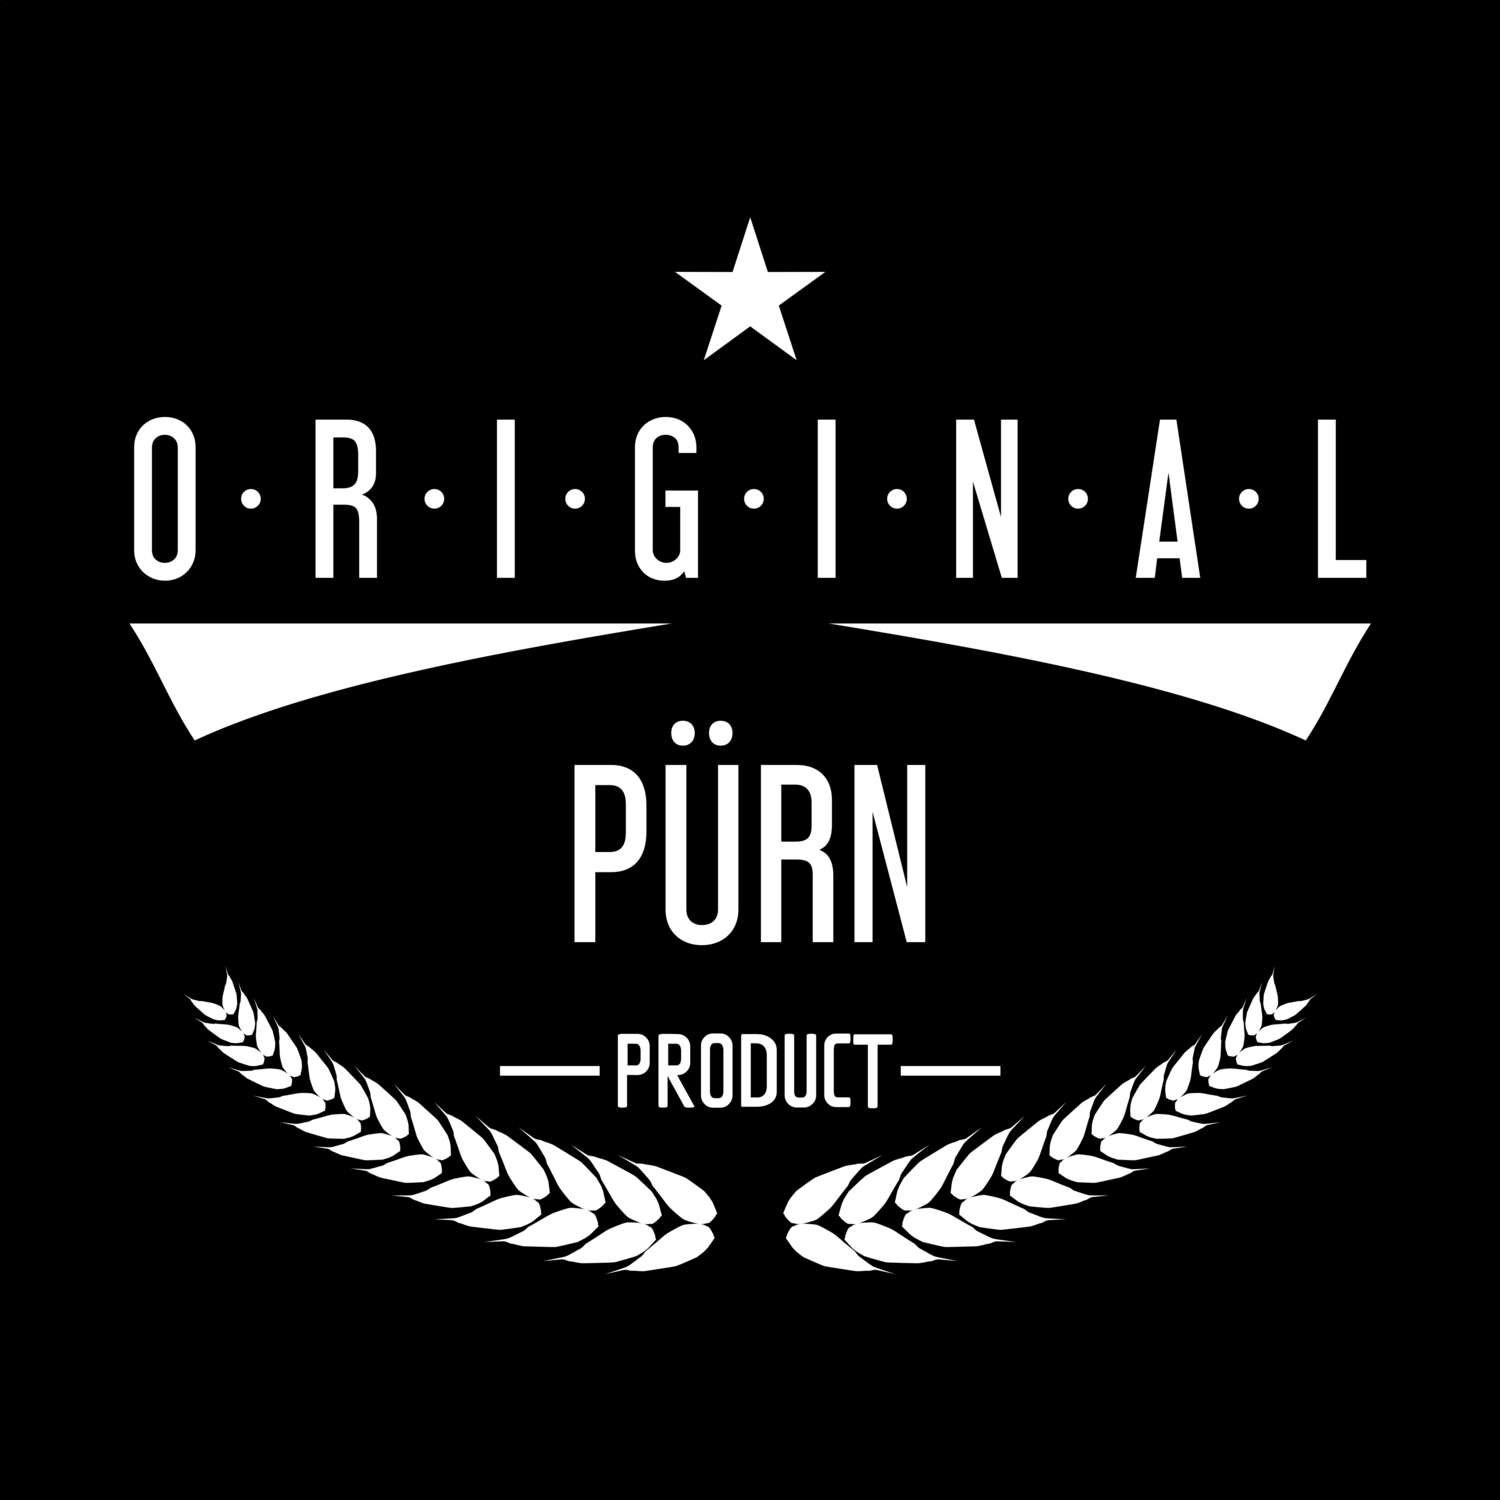 Pürn T-Shirt »Original Product«